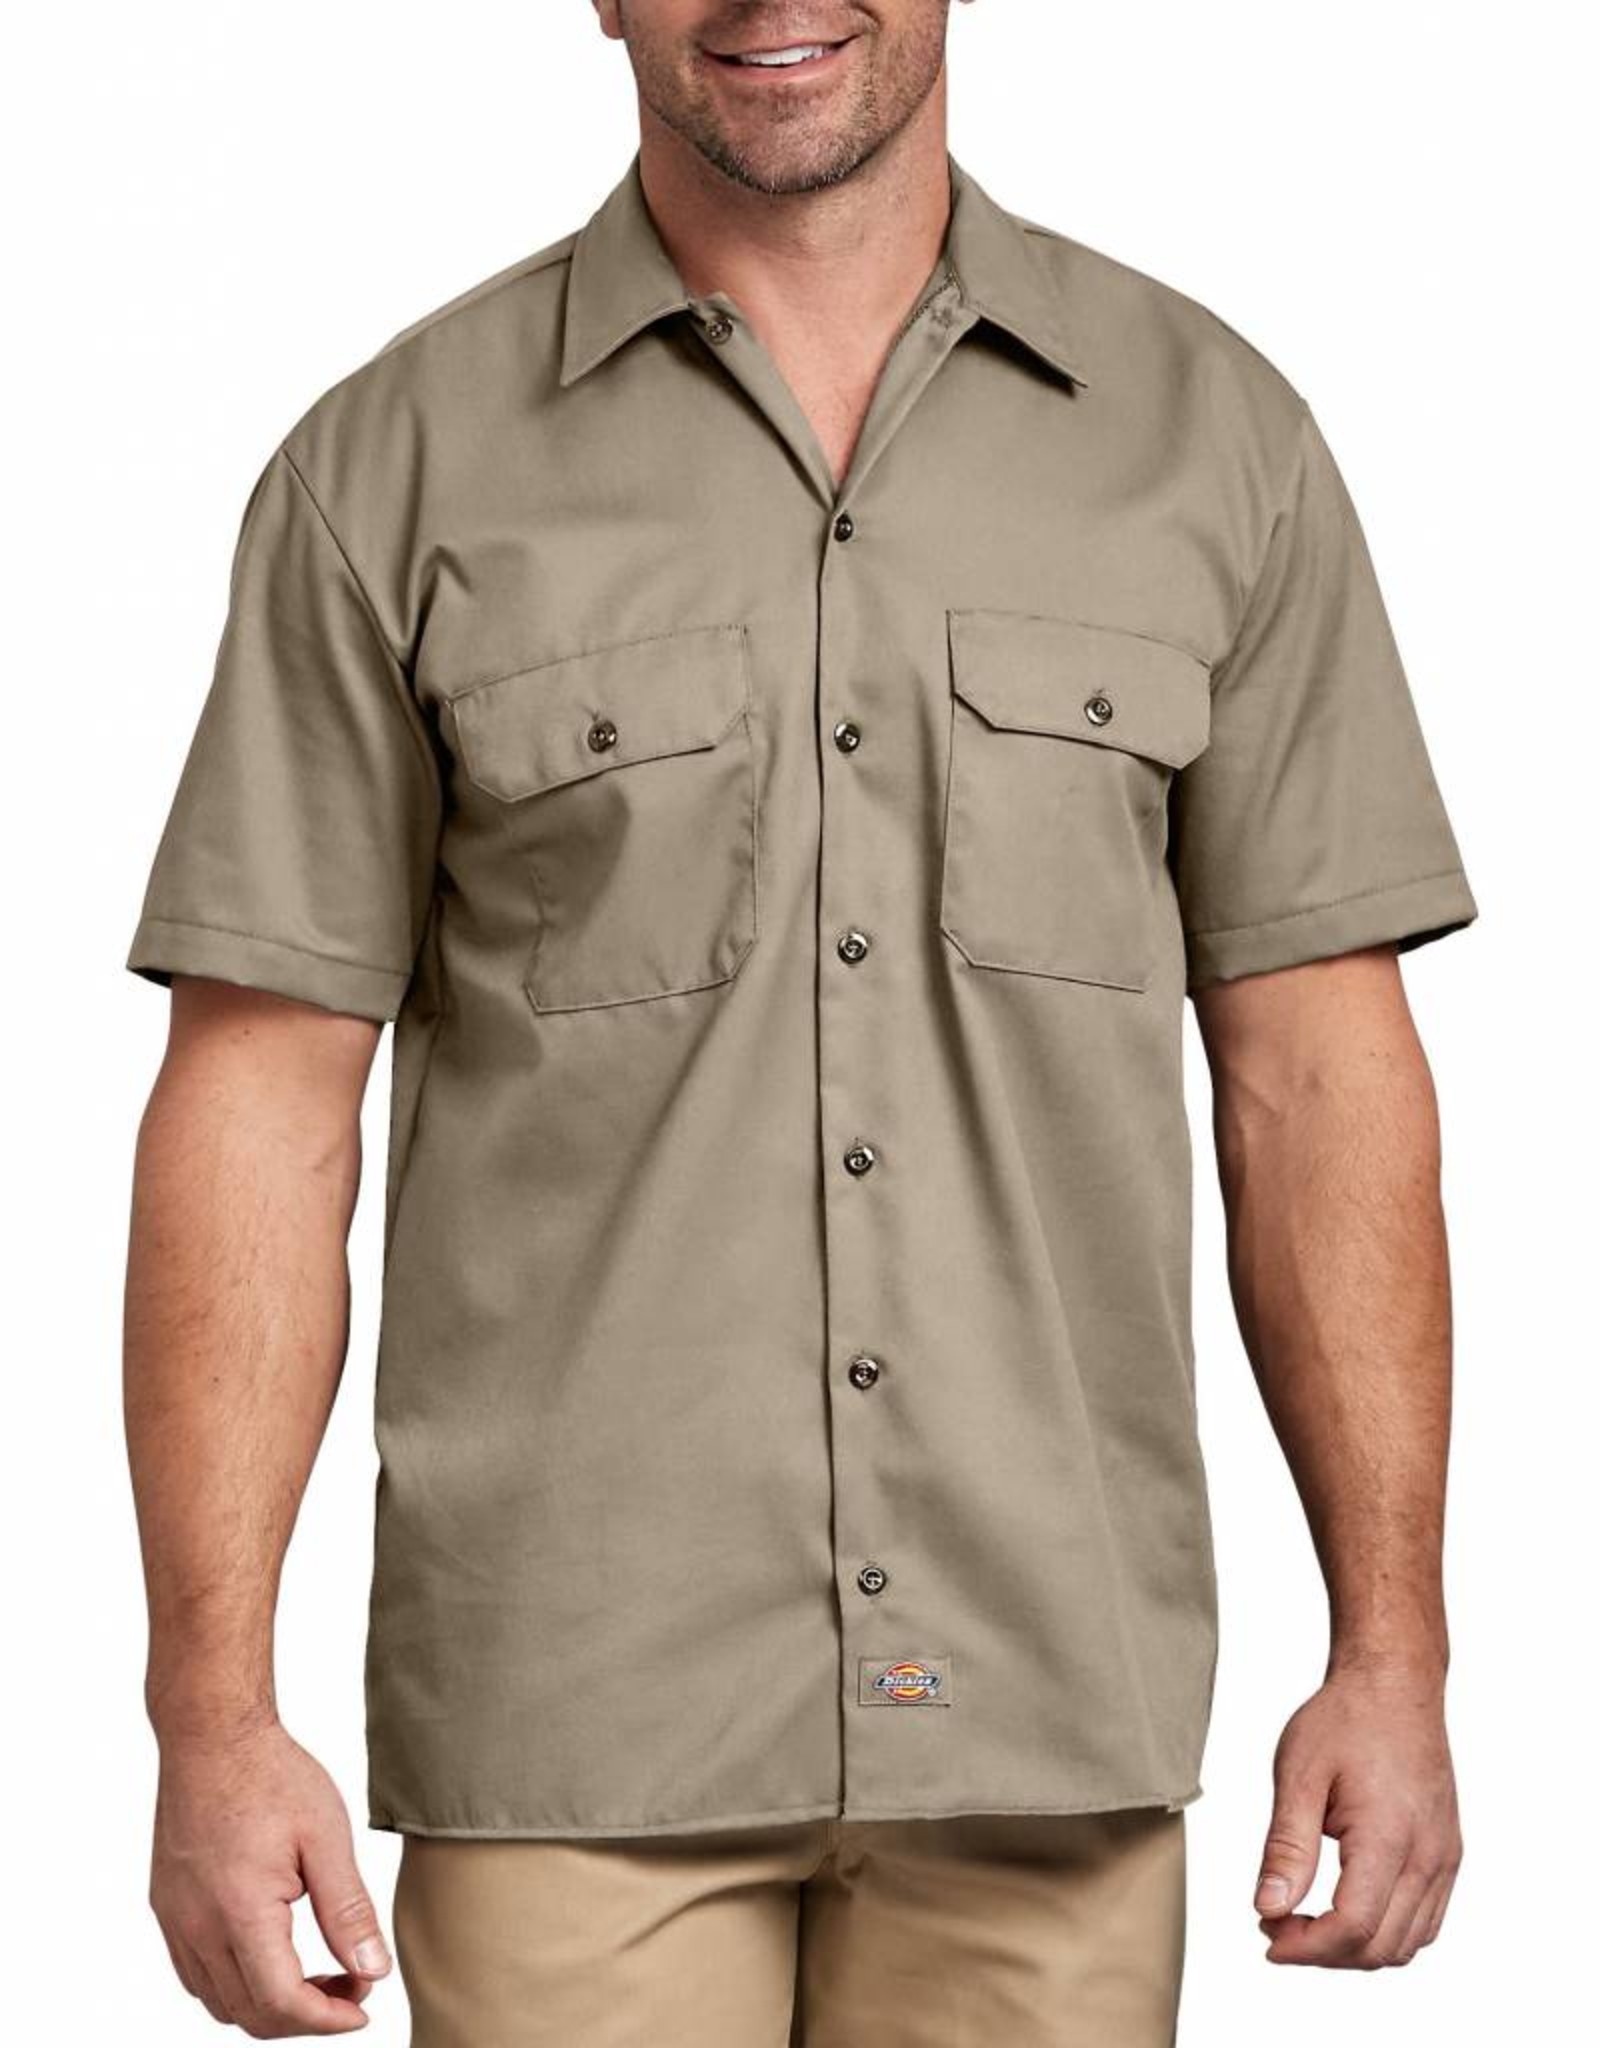 DICKIES Short Sleeve Work Shirt 1574